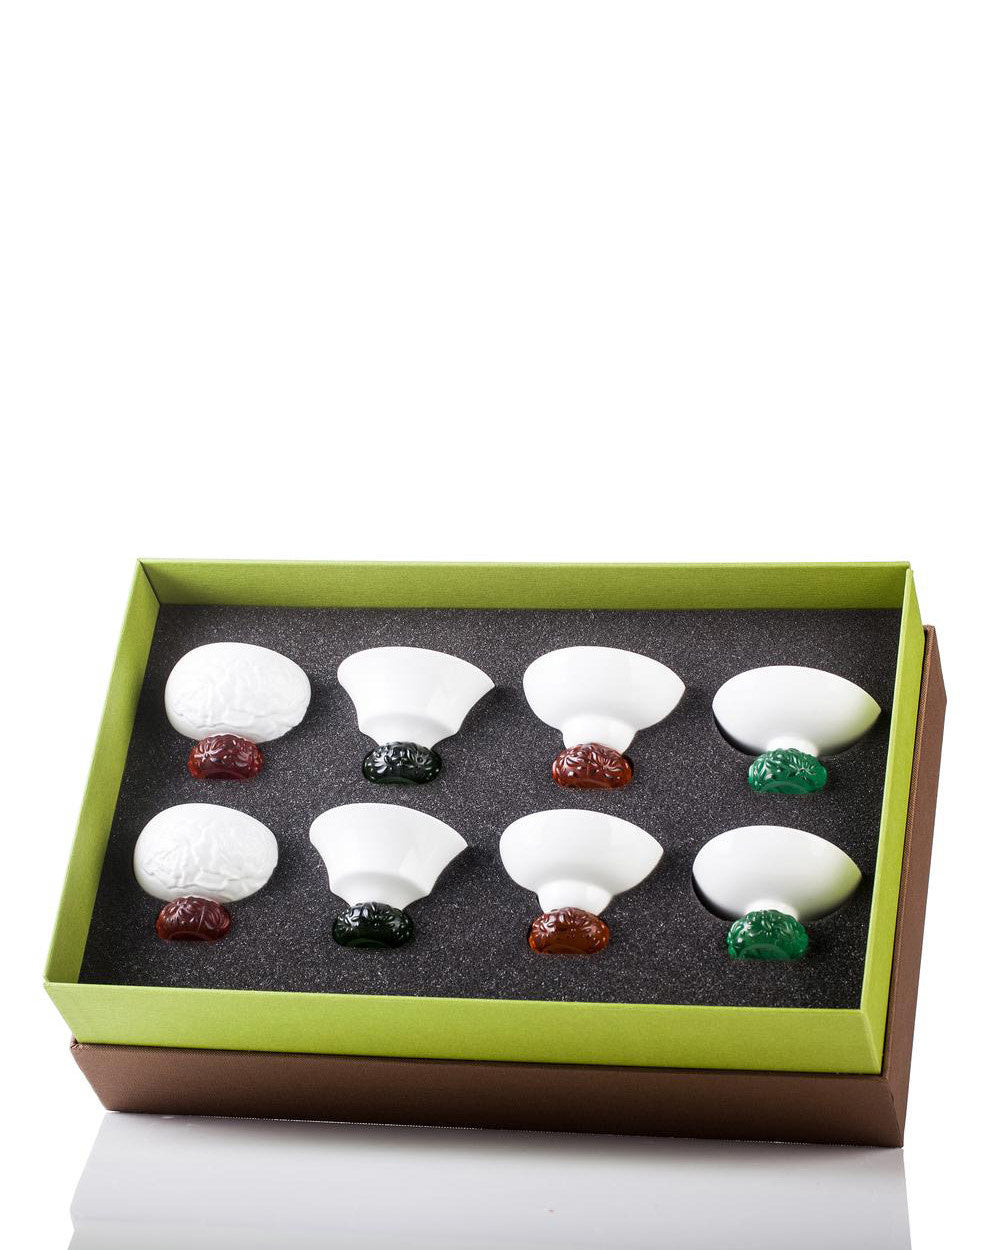 LIULI Crystal Art LIULI Bone China Sake Cups with Fine Crystal, Set of 8, Holiday Limited Edition